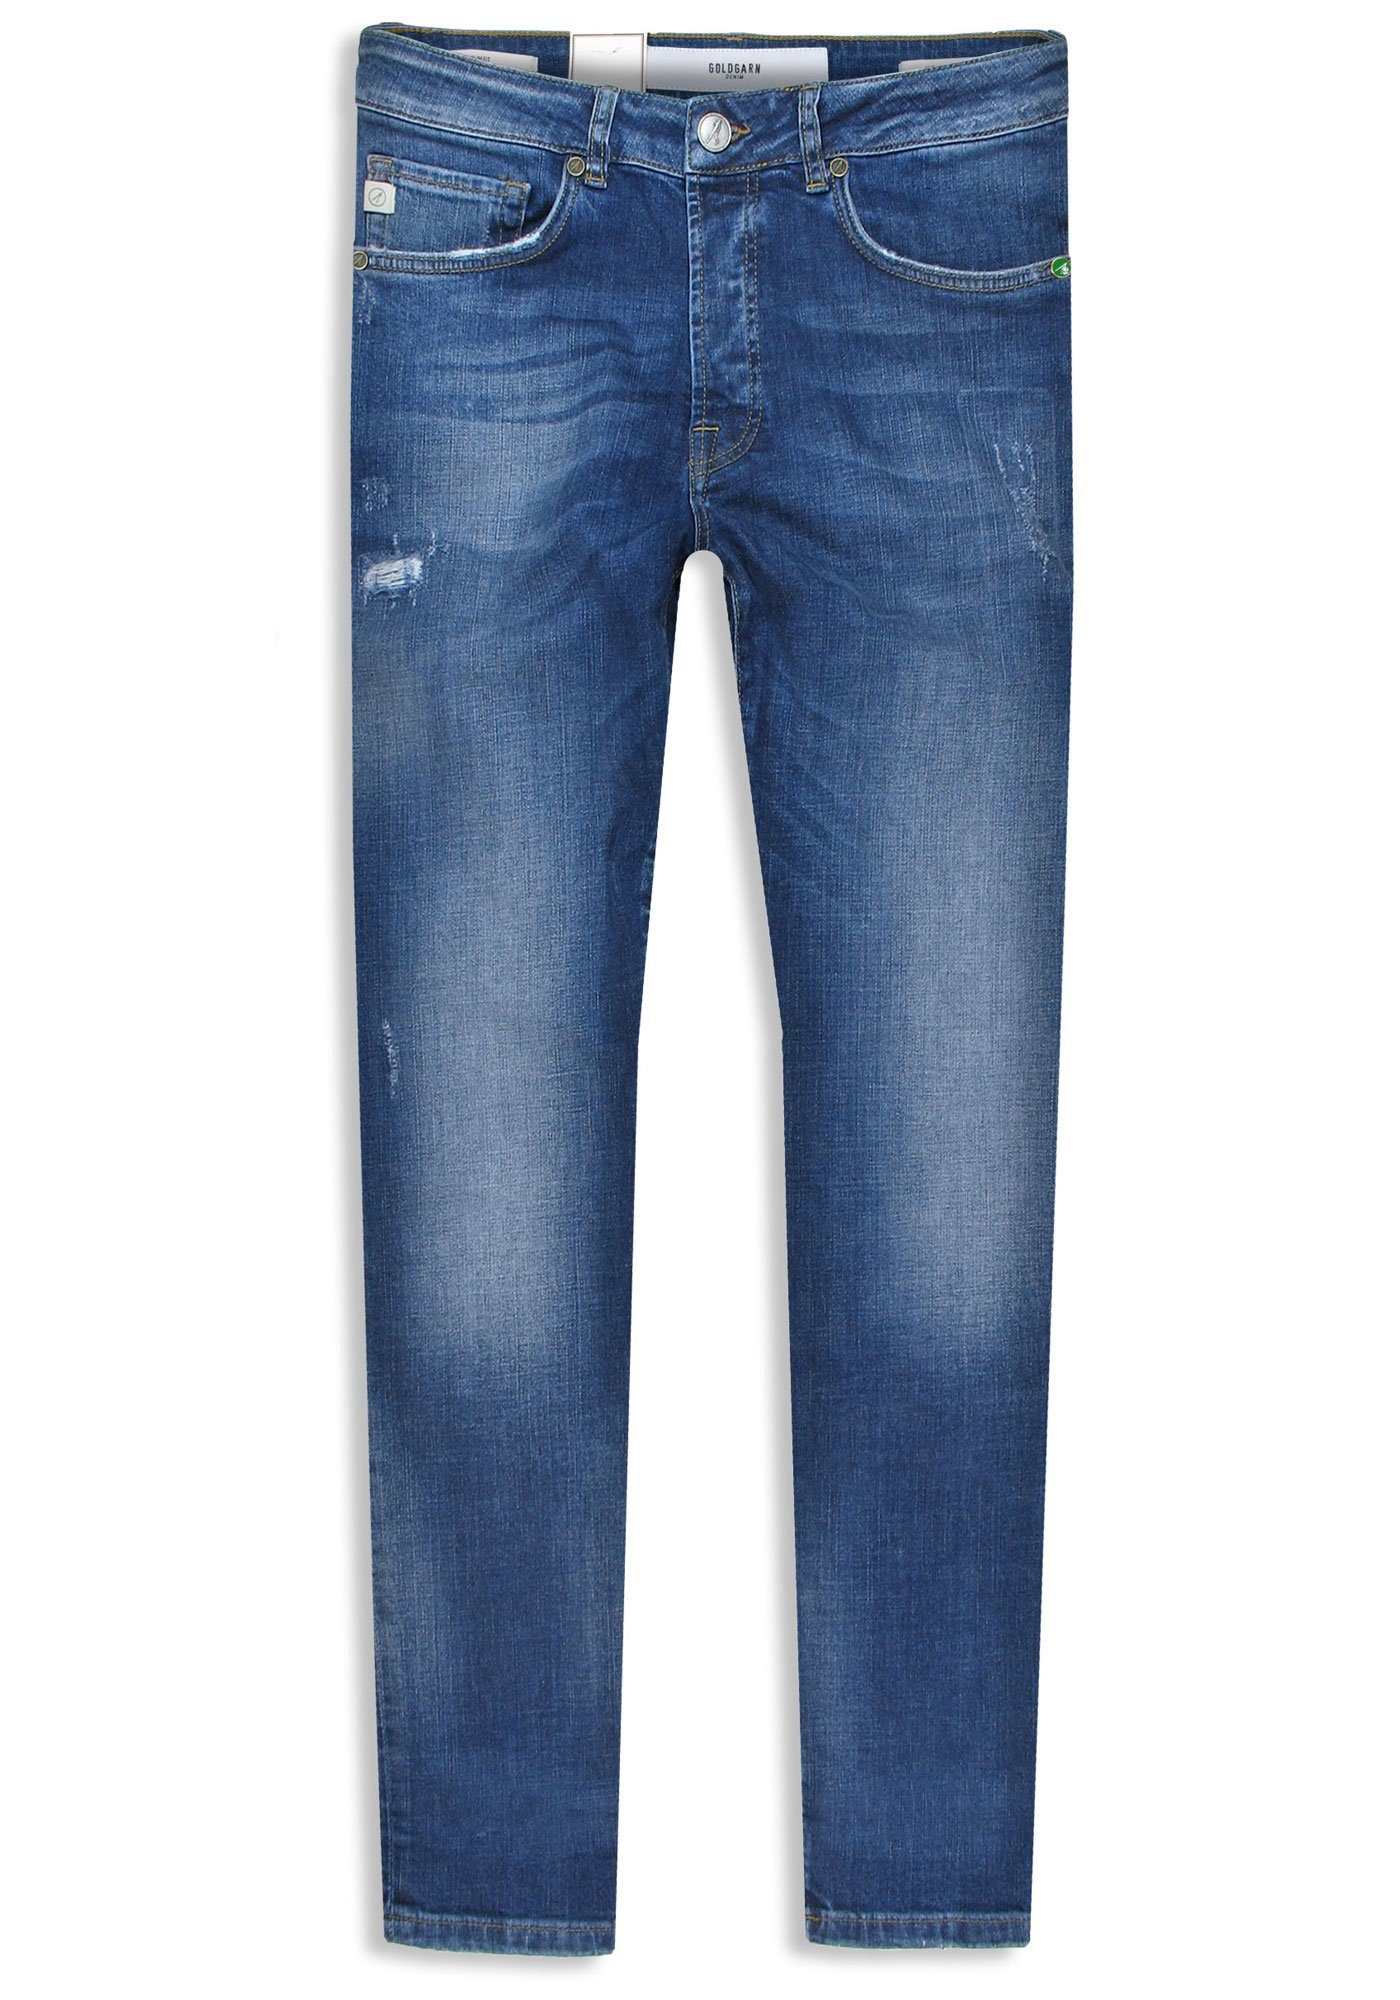 Goldgarn 5-Pocket-Jeans Herren U2 Slim Fit distressed Denim 1090 Midblue | Slim-Fit Jeans